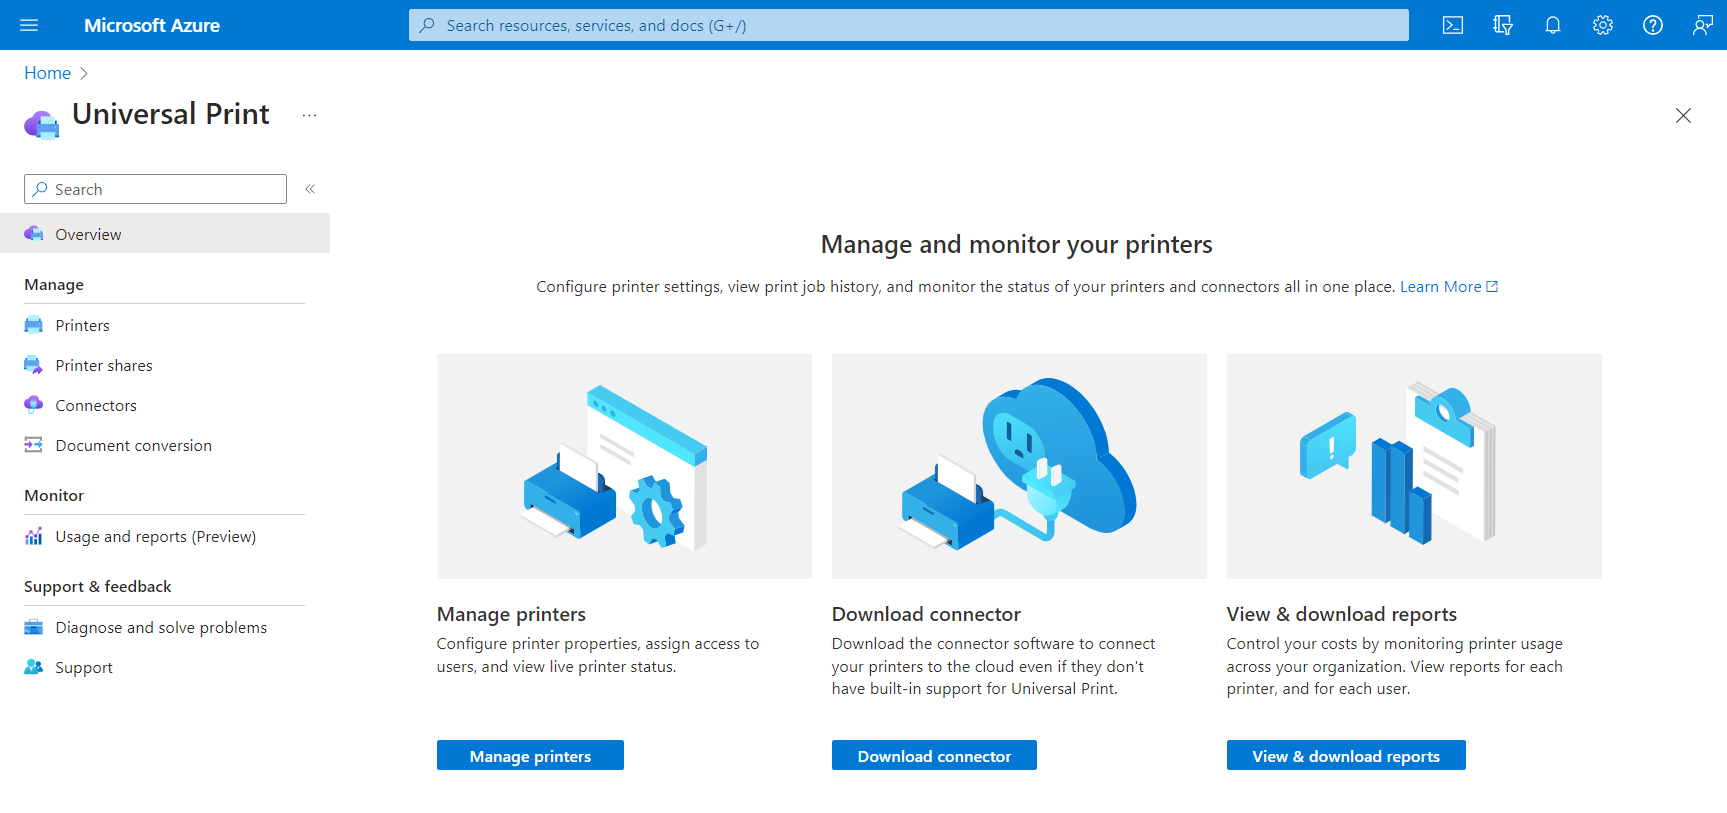 Screenshot of the Universal Print Azure portal home page